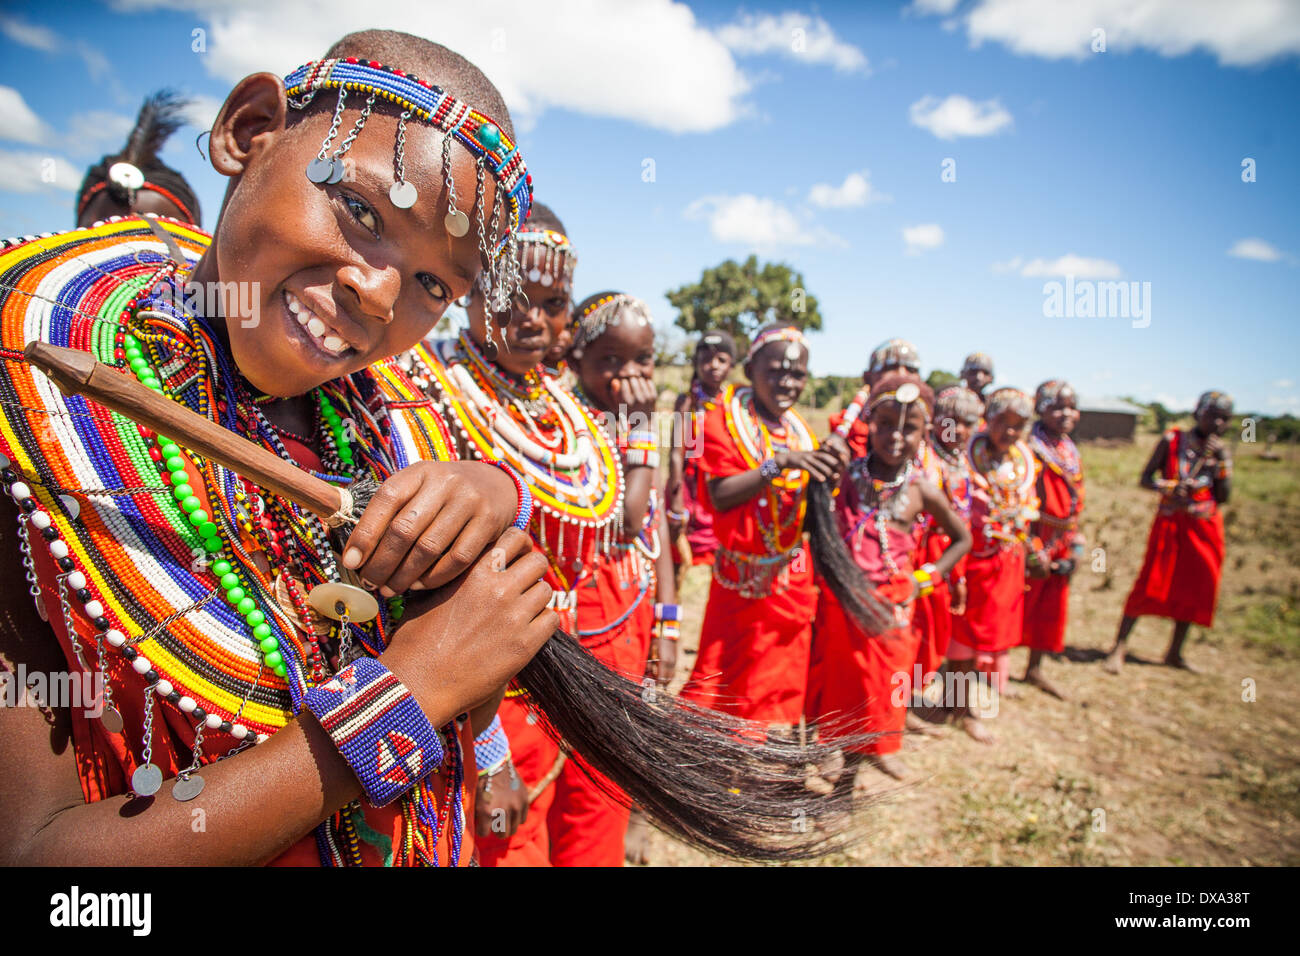 Maasai dancers in the Masai Mara preserve, Kenya. Stock Photo